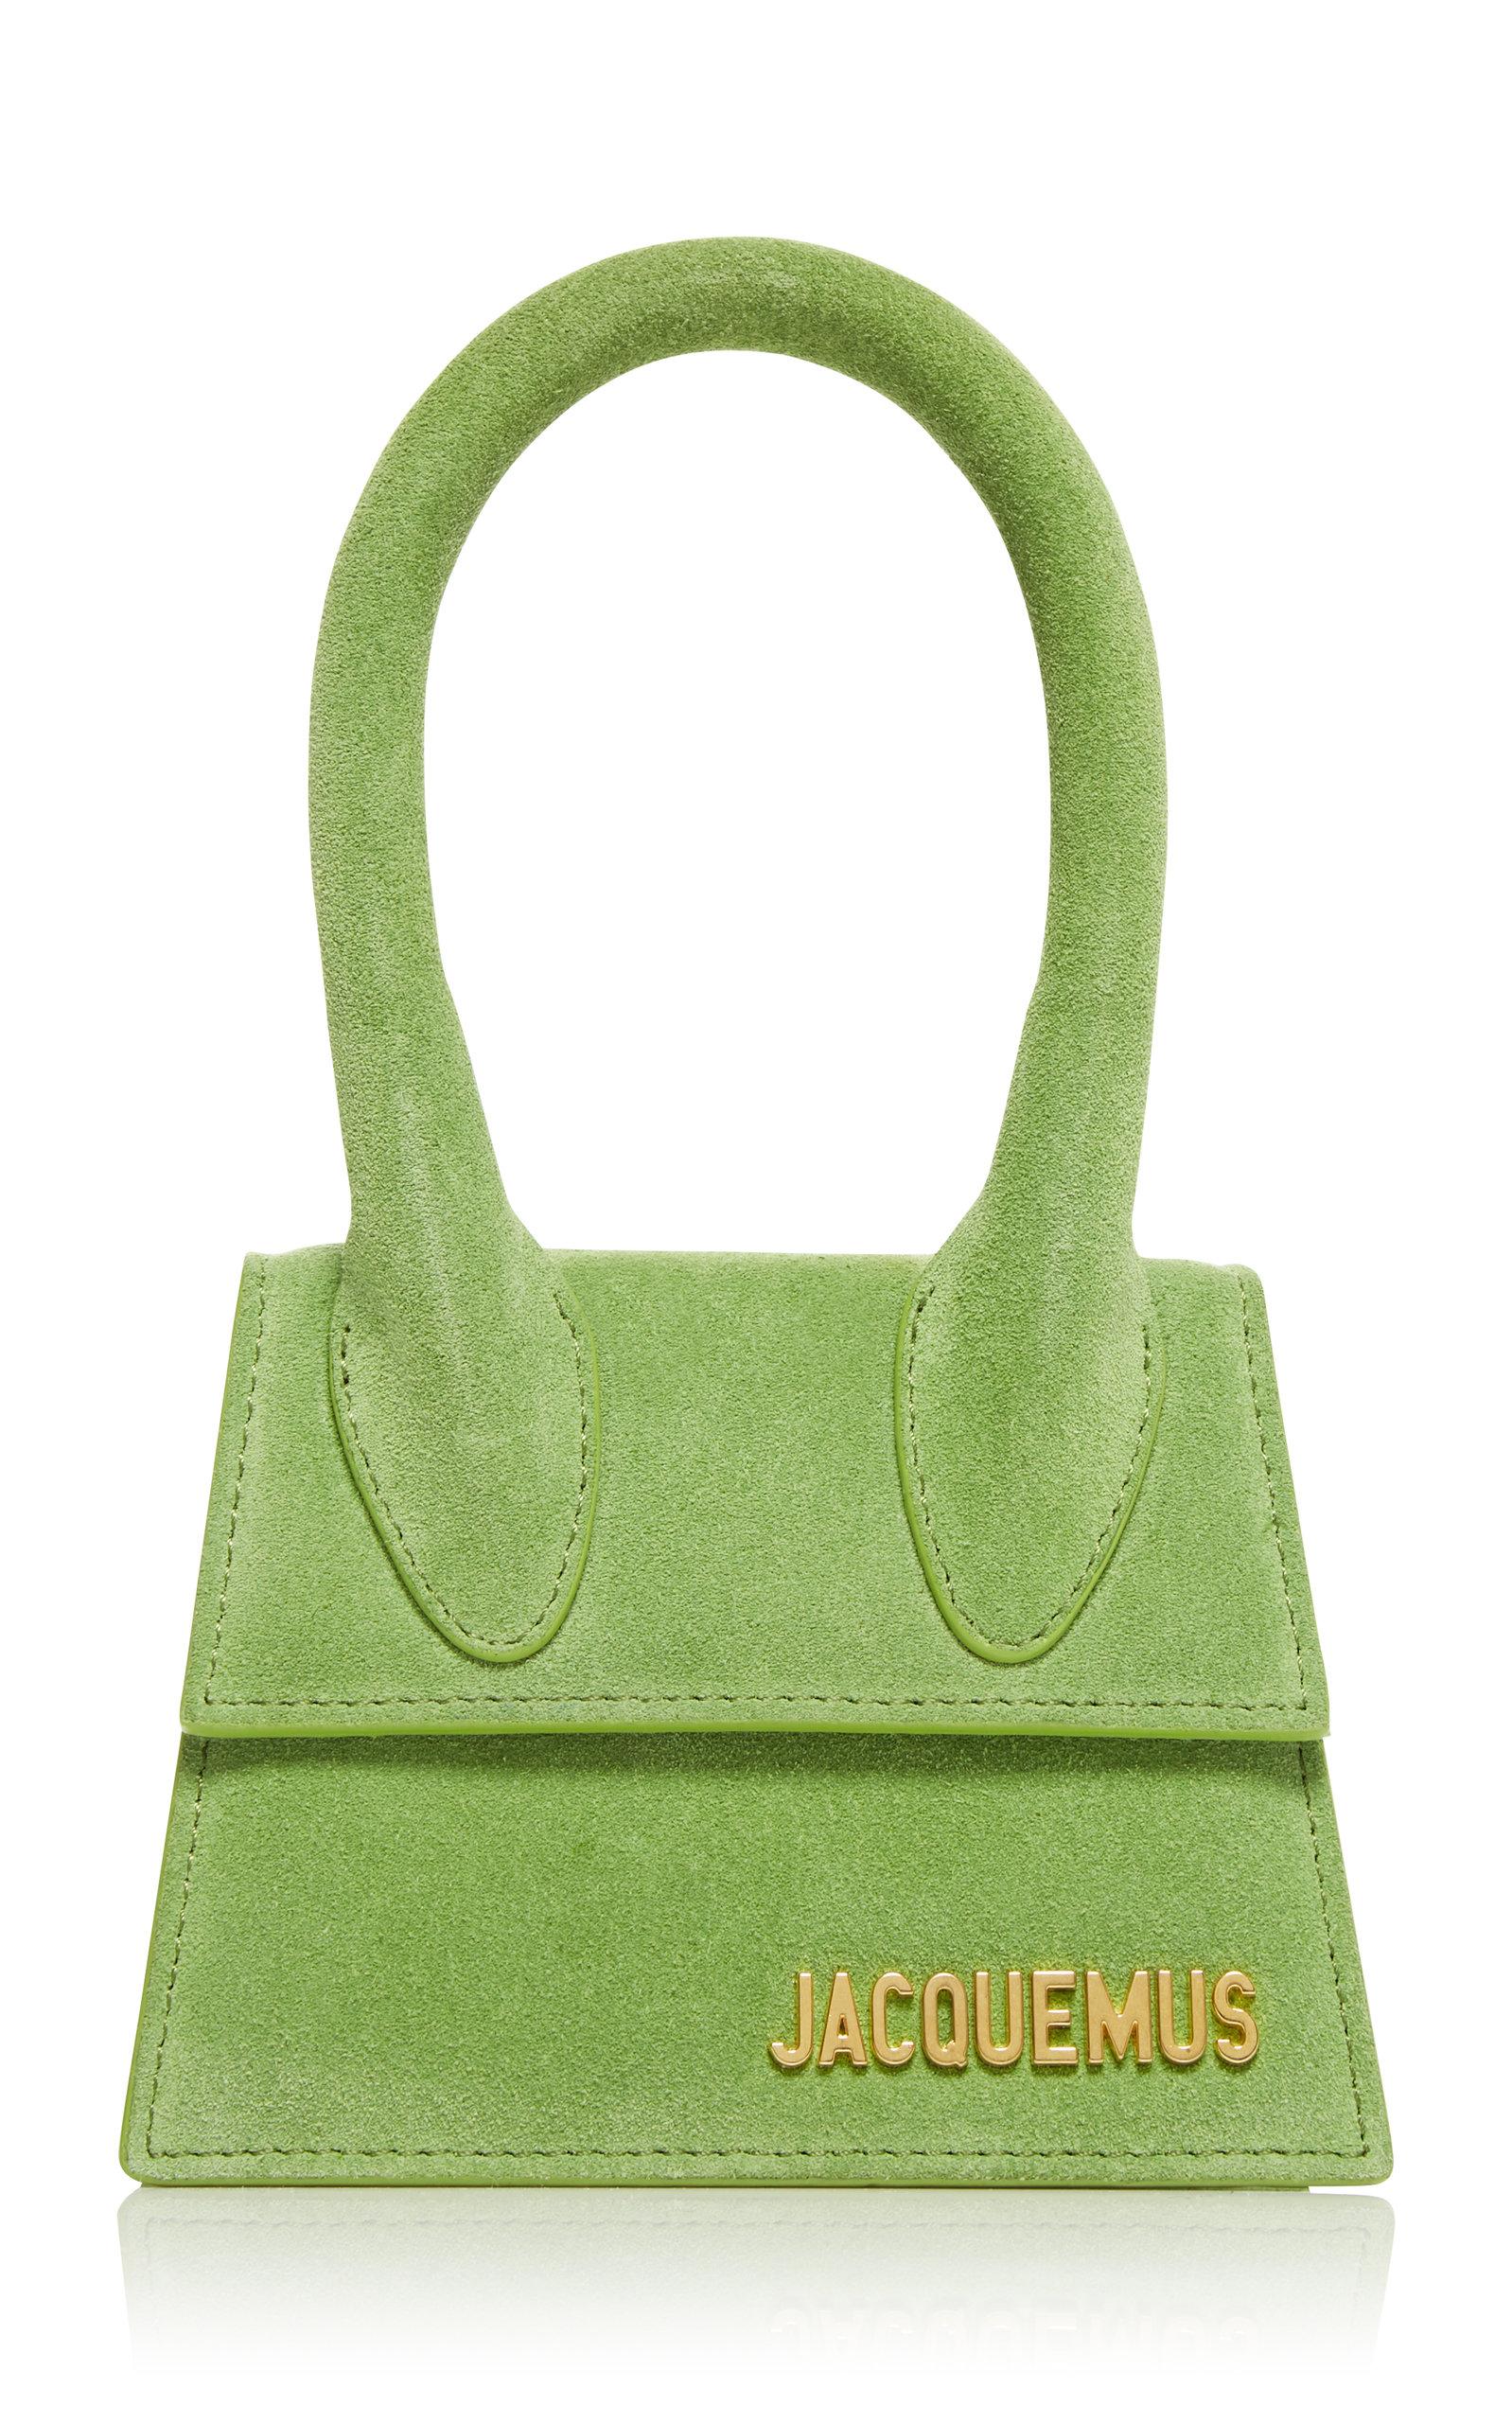 Jacquemus Le Chiquito Mini Suede Bag in Green